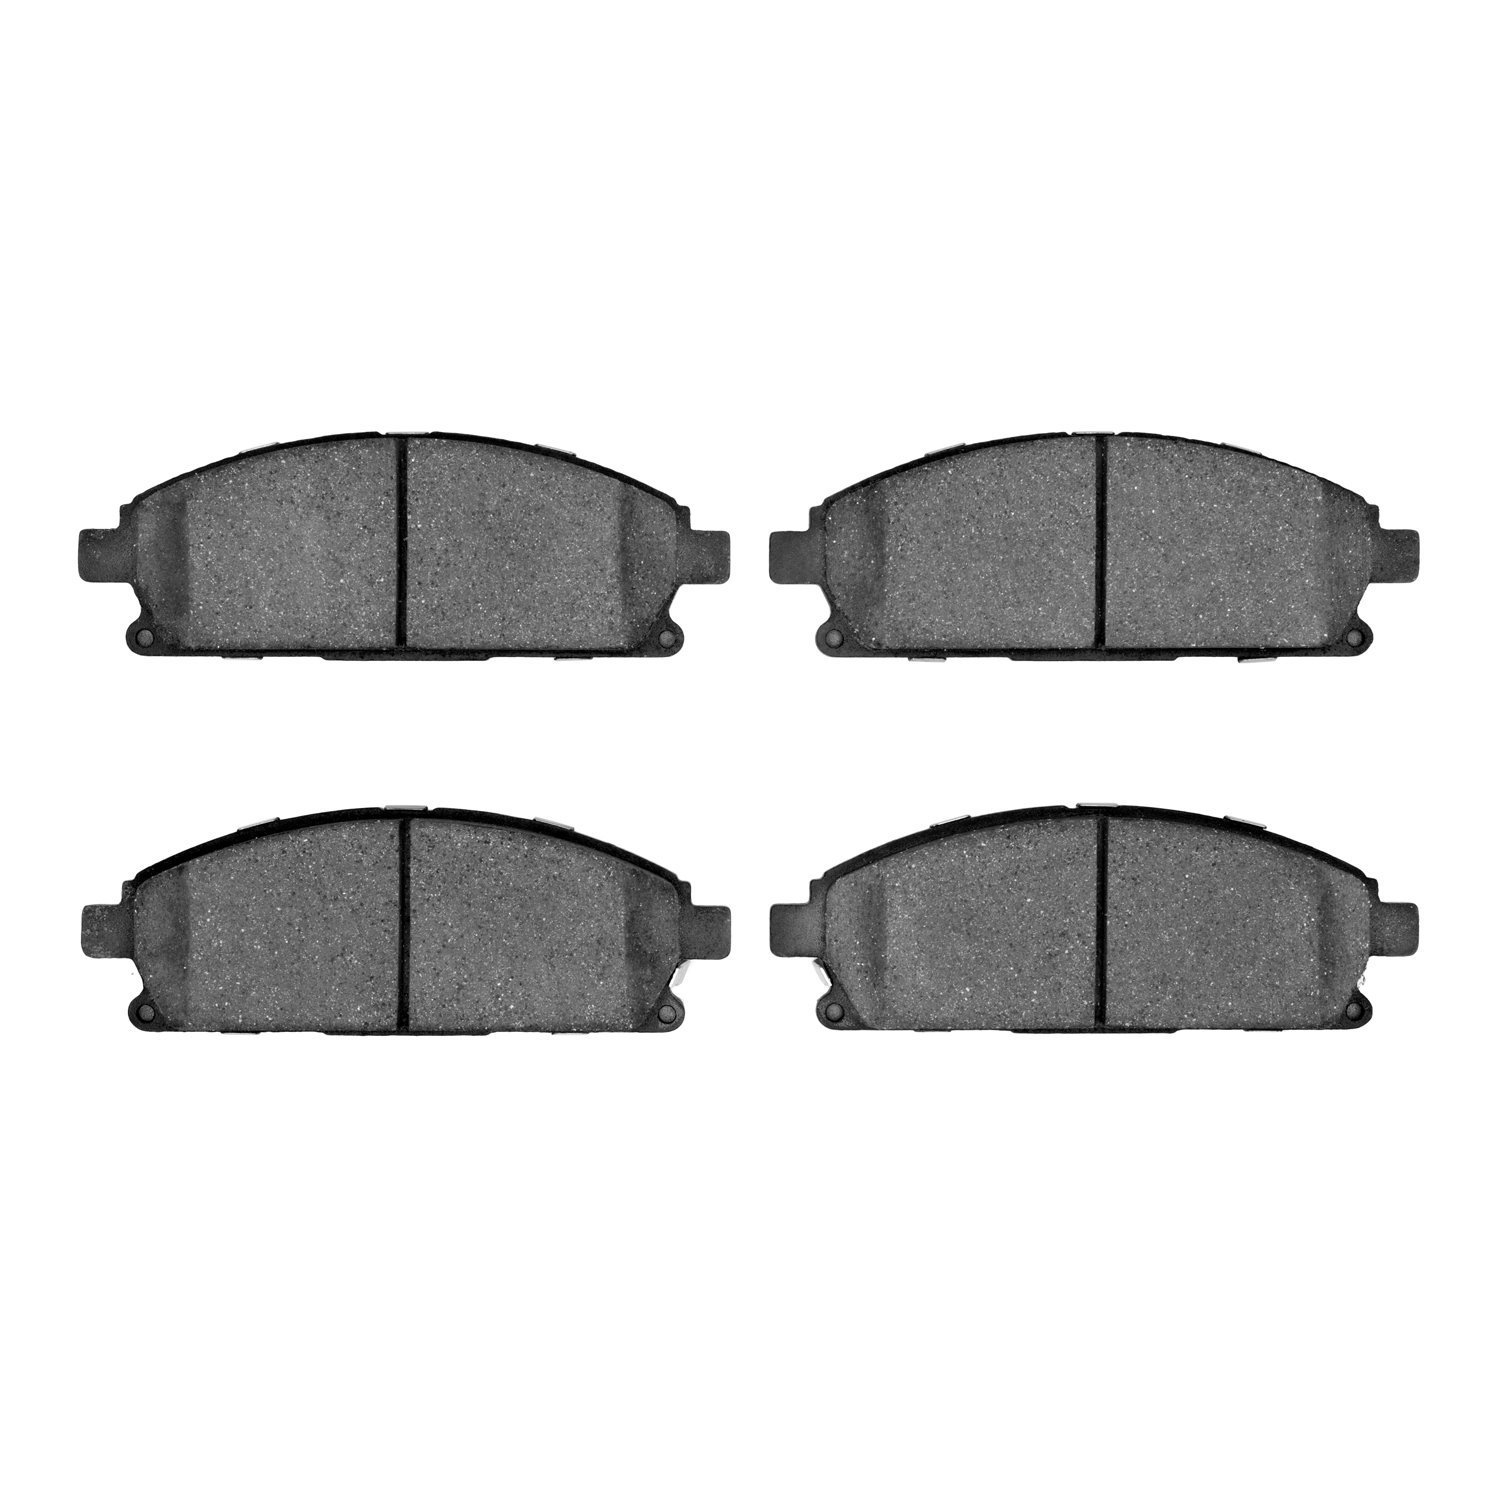 Optimum OE Brake Pads, 1996-2017 Fits Multiple Makes/Models, Position: Front